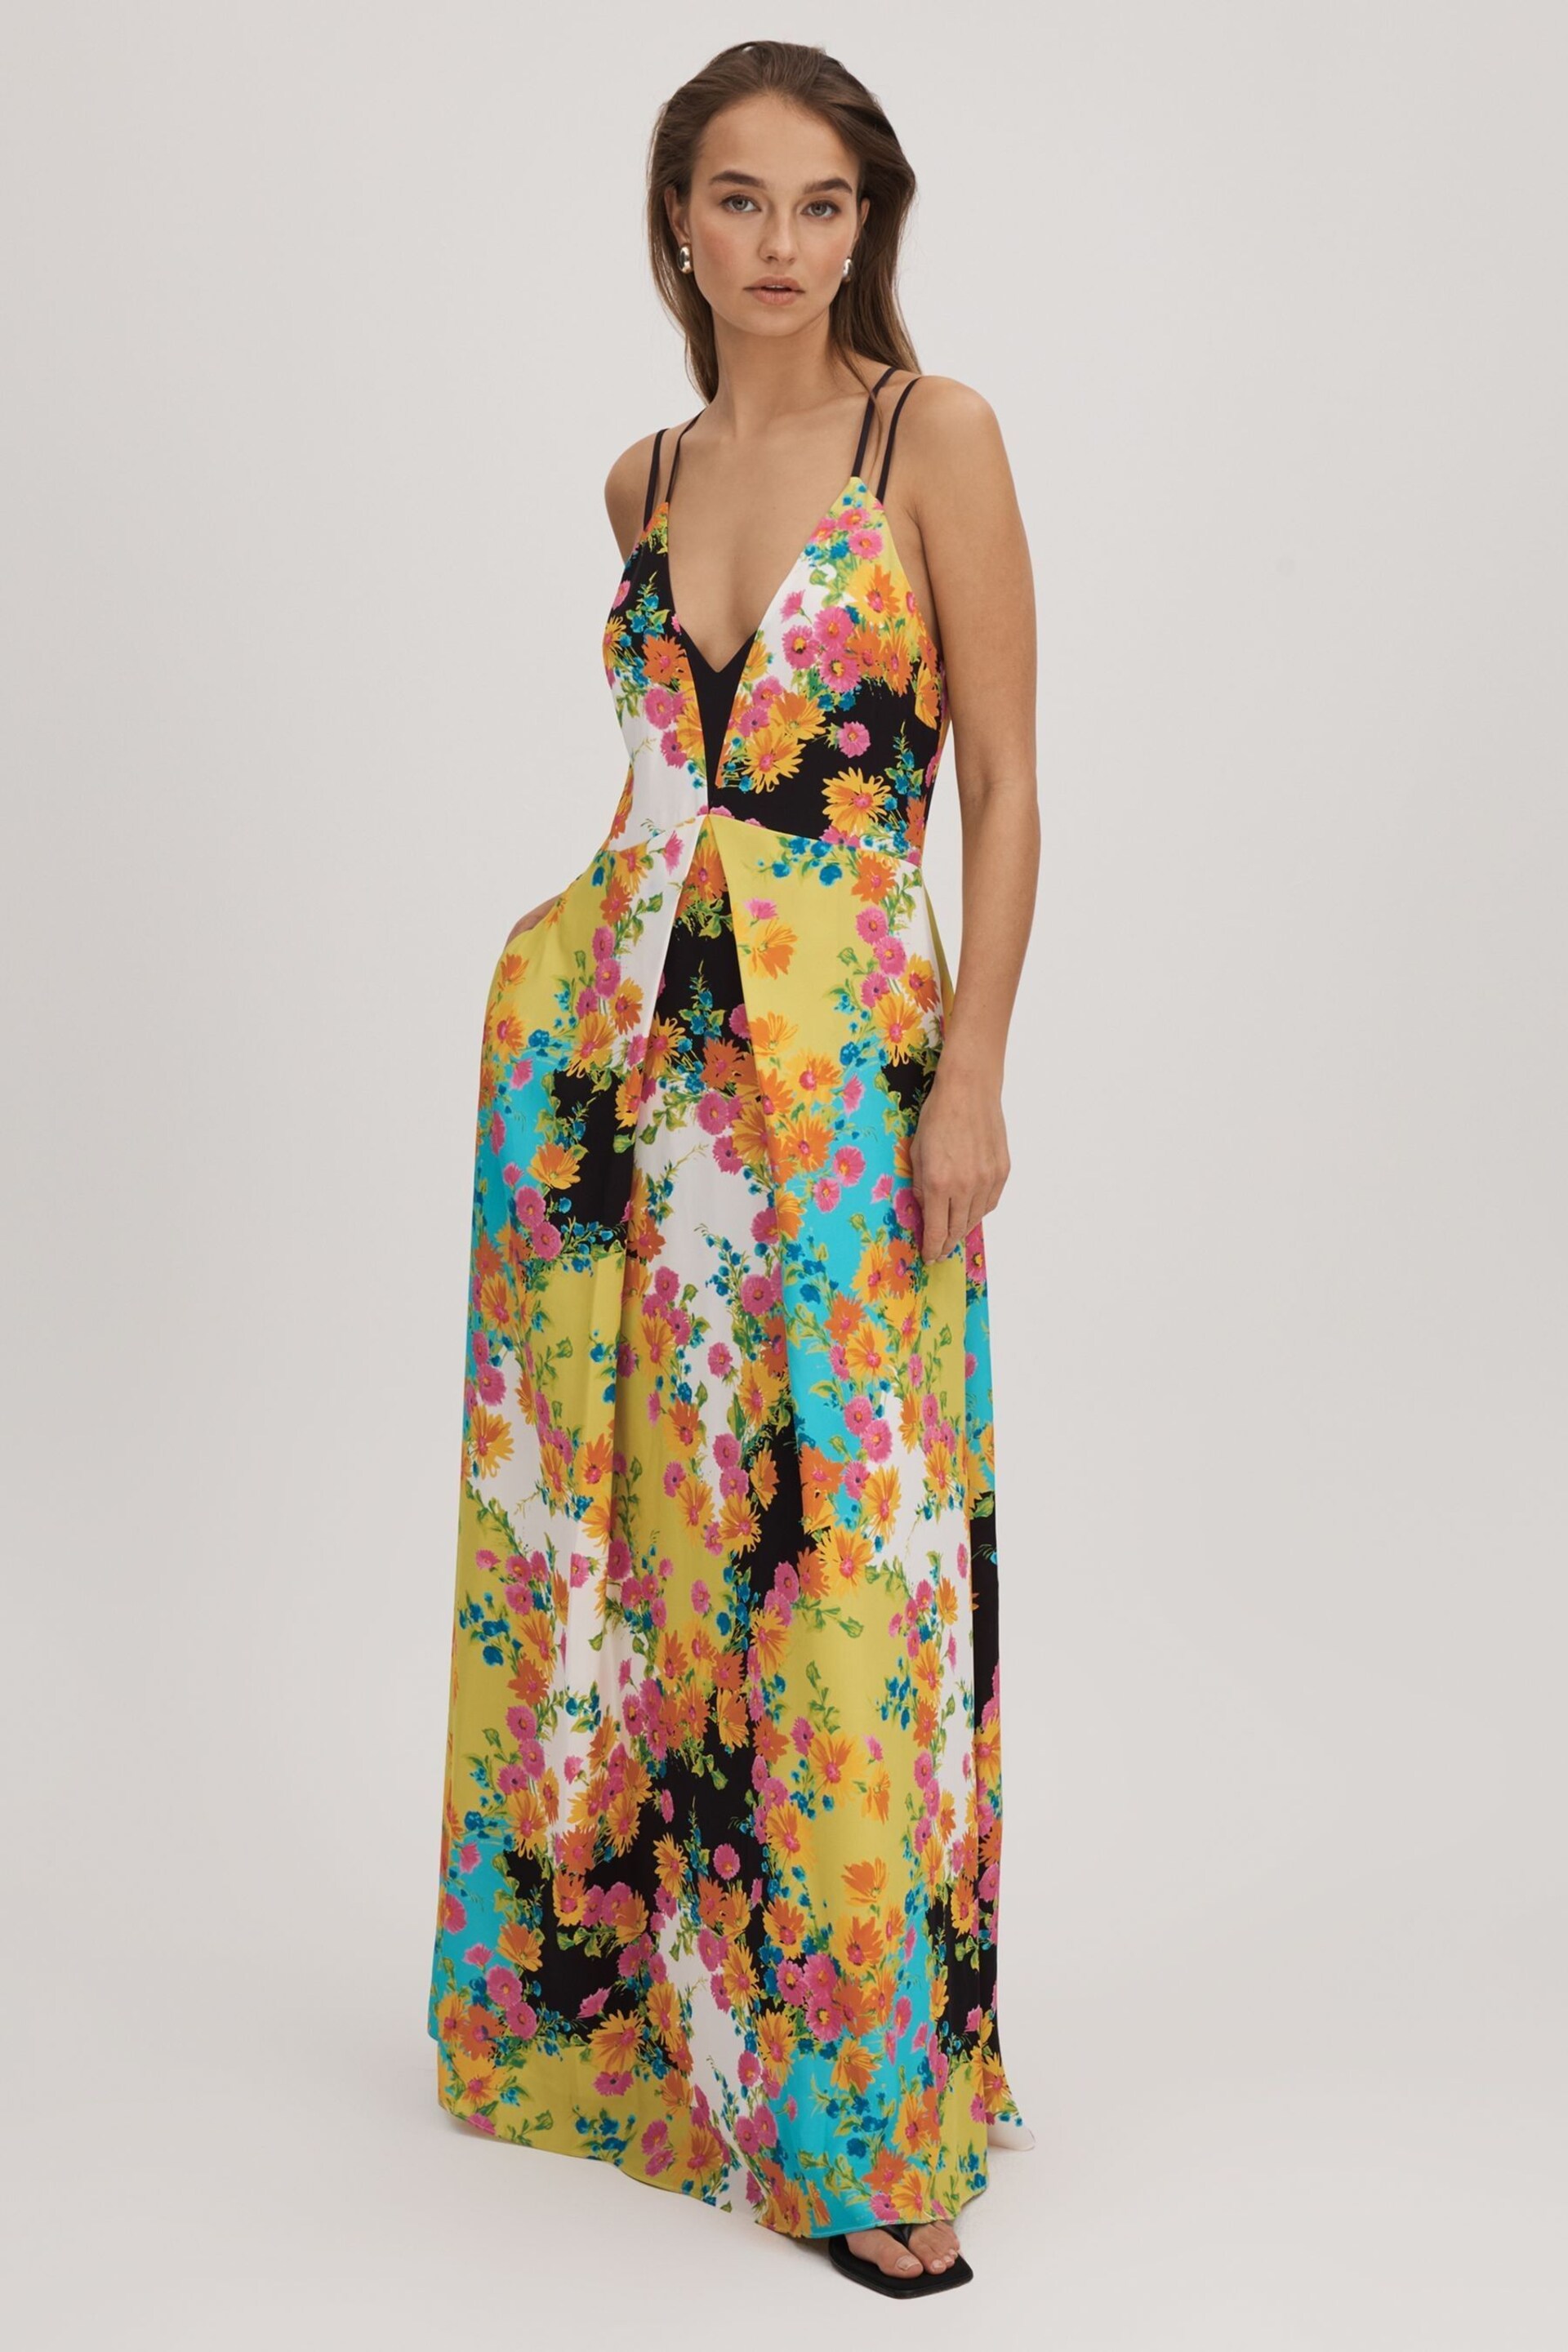 Florere Printed Dual Strap Maxi Dress - Image 1 of 6